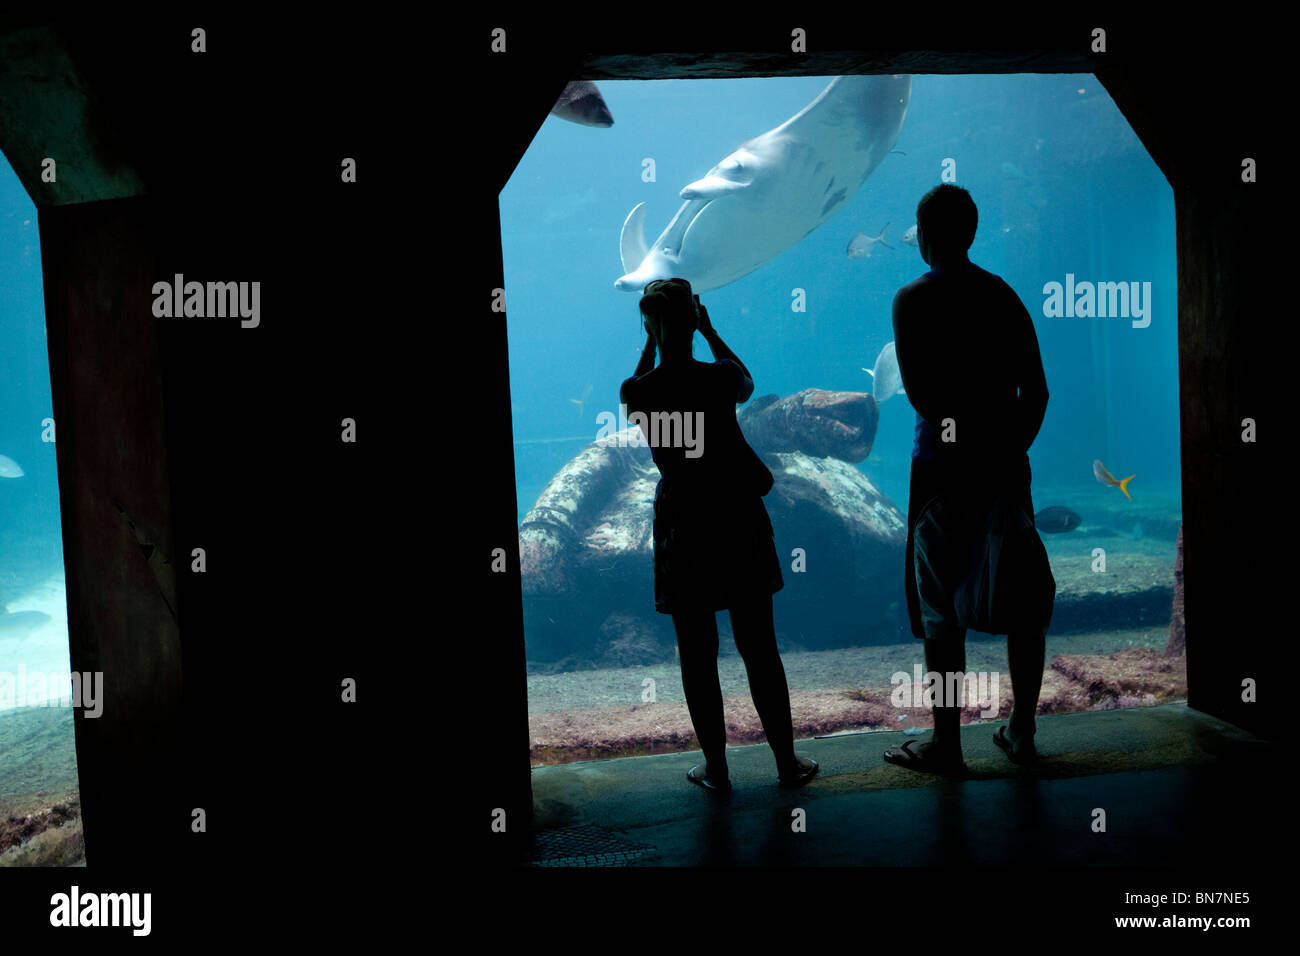 Sichtfenster in der Dig marinen Lebensraum Ausstellung, Atlantis, Paradise Island Resort, Bahamas. Stockfoto